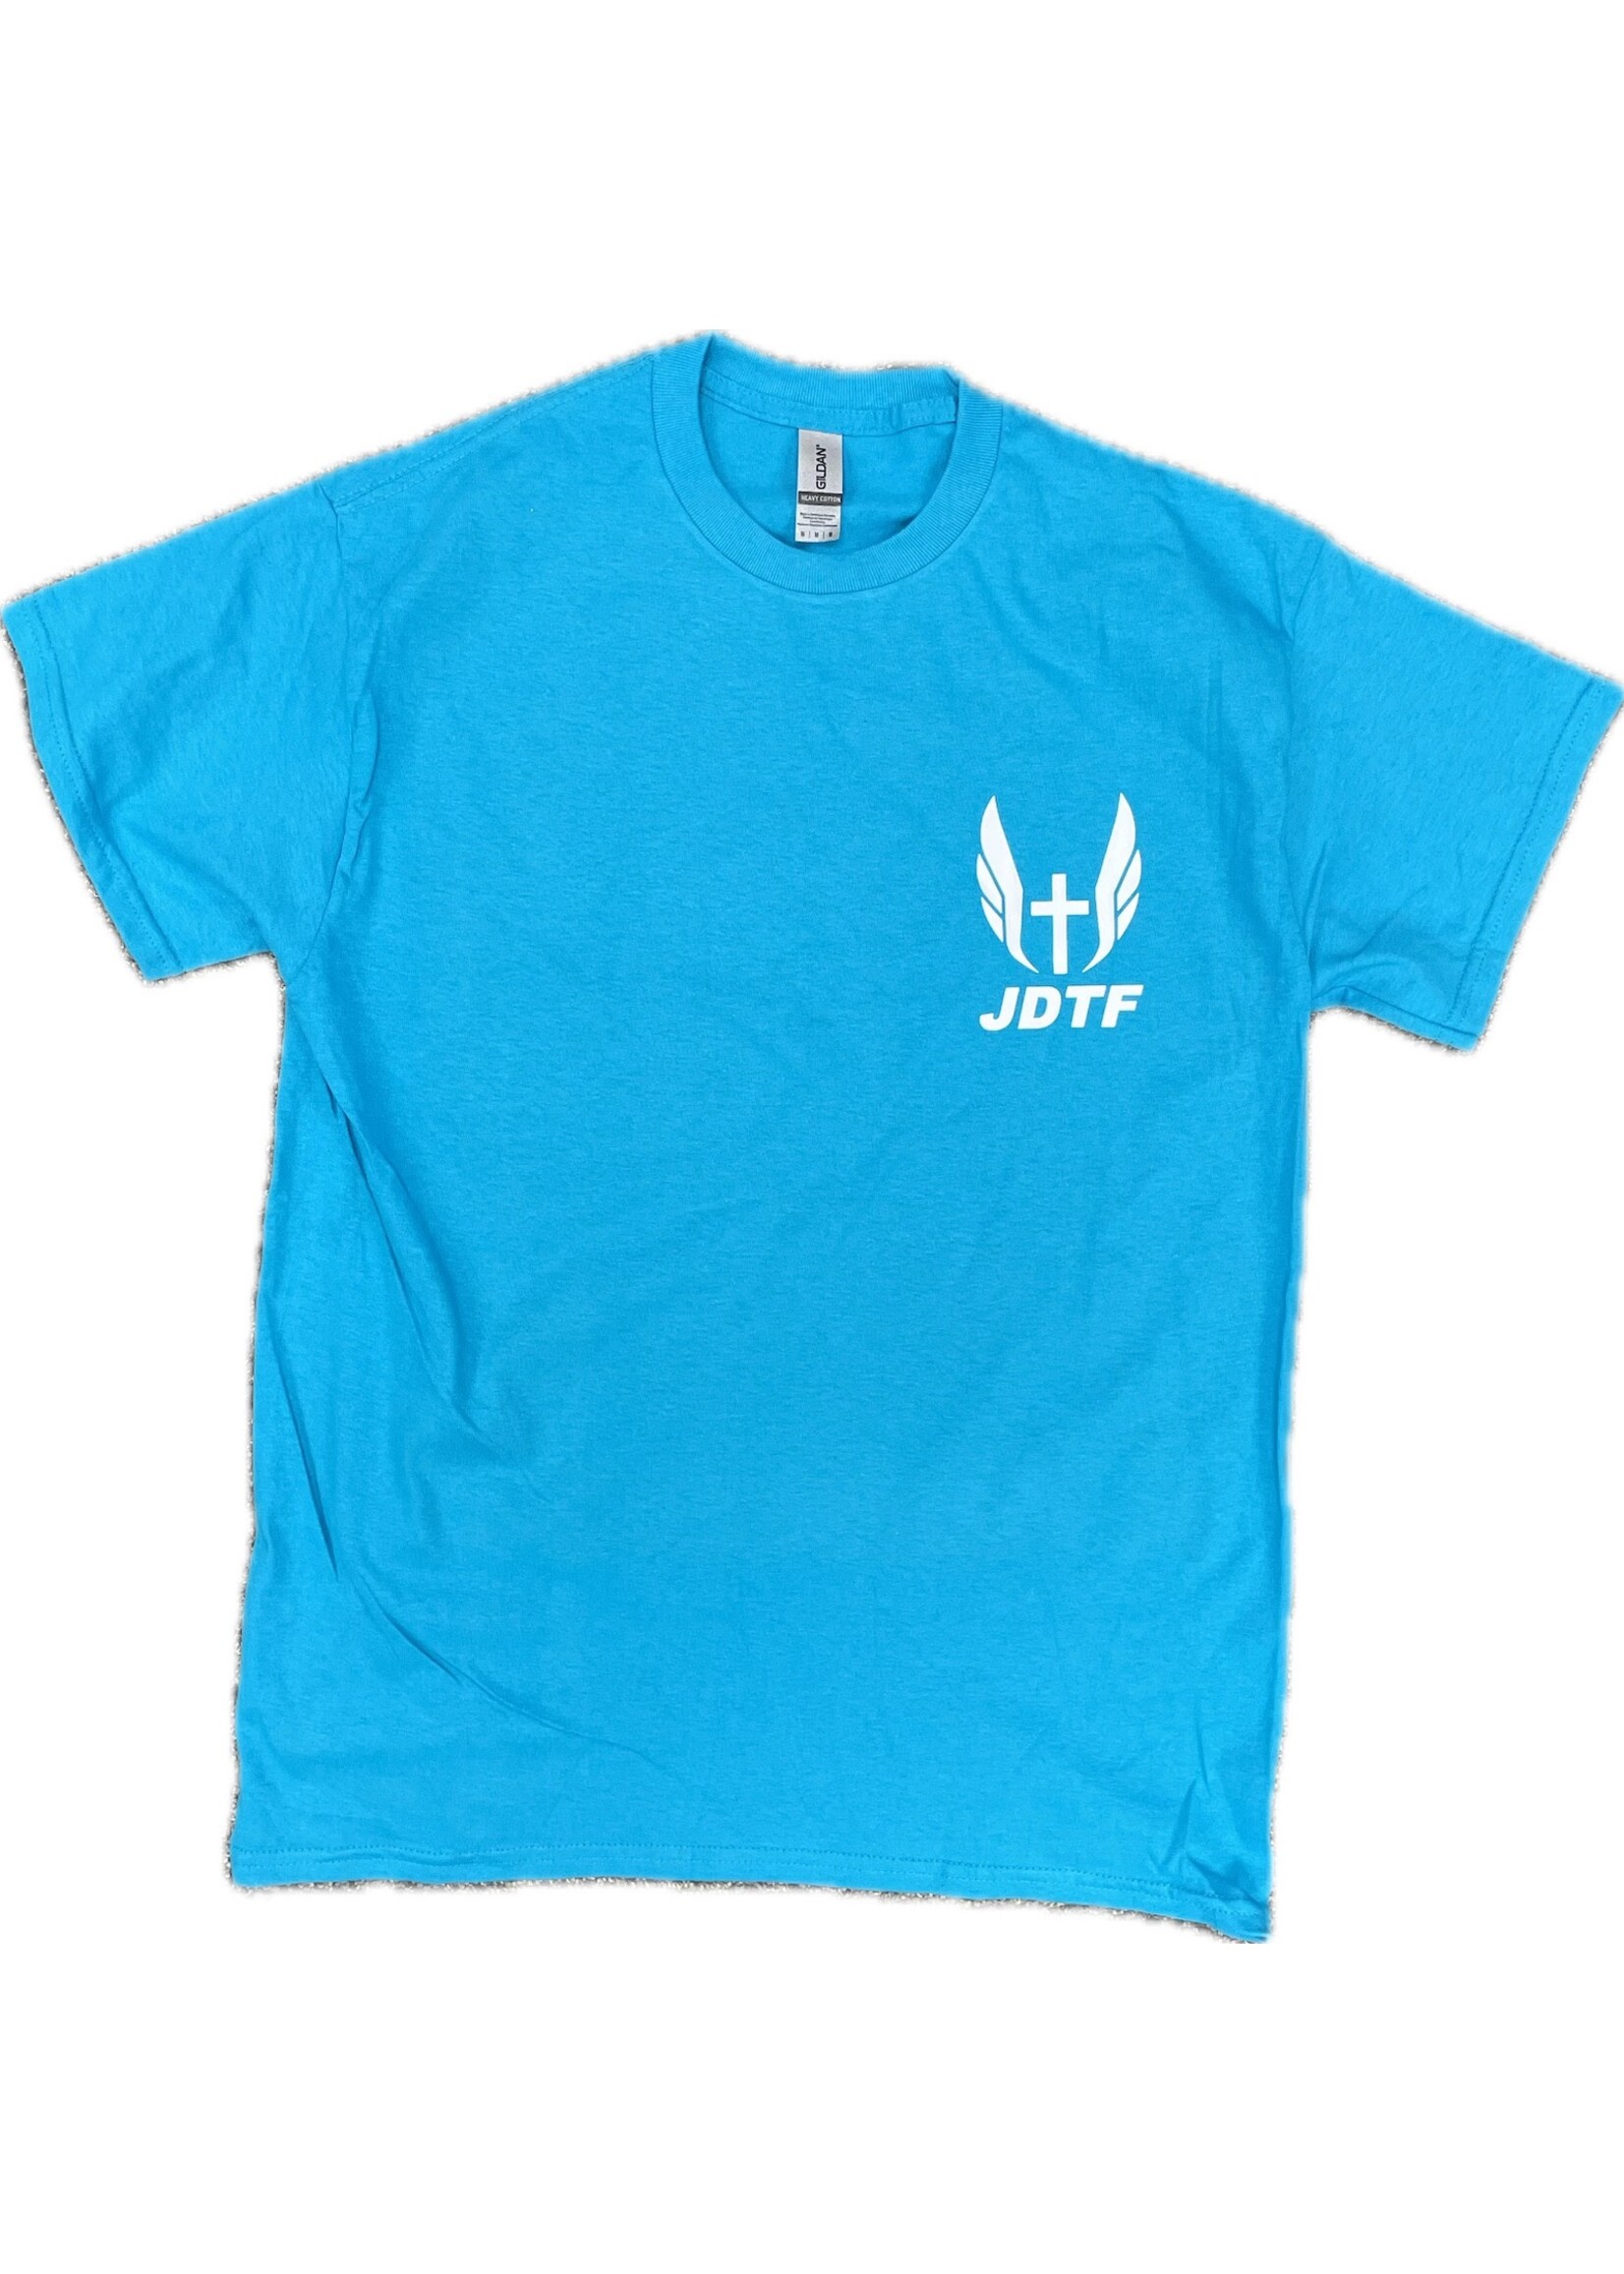 NON-UNIFORM JDTF small logo Track & Field  Unisex S/S Shirt